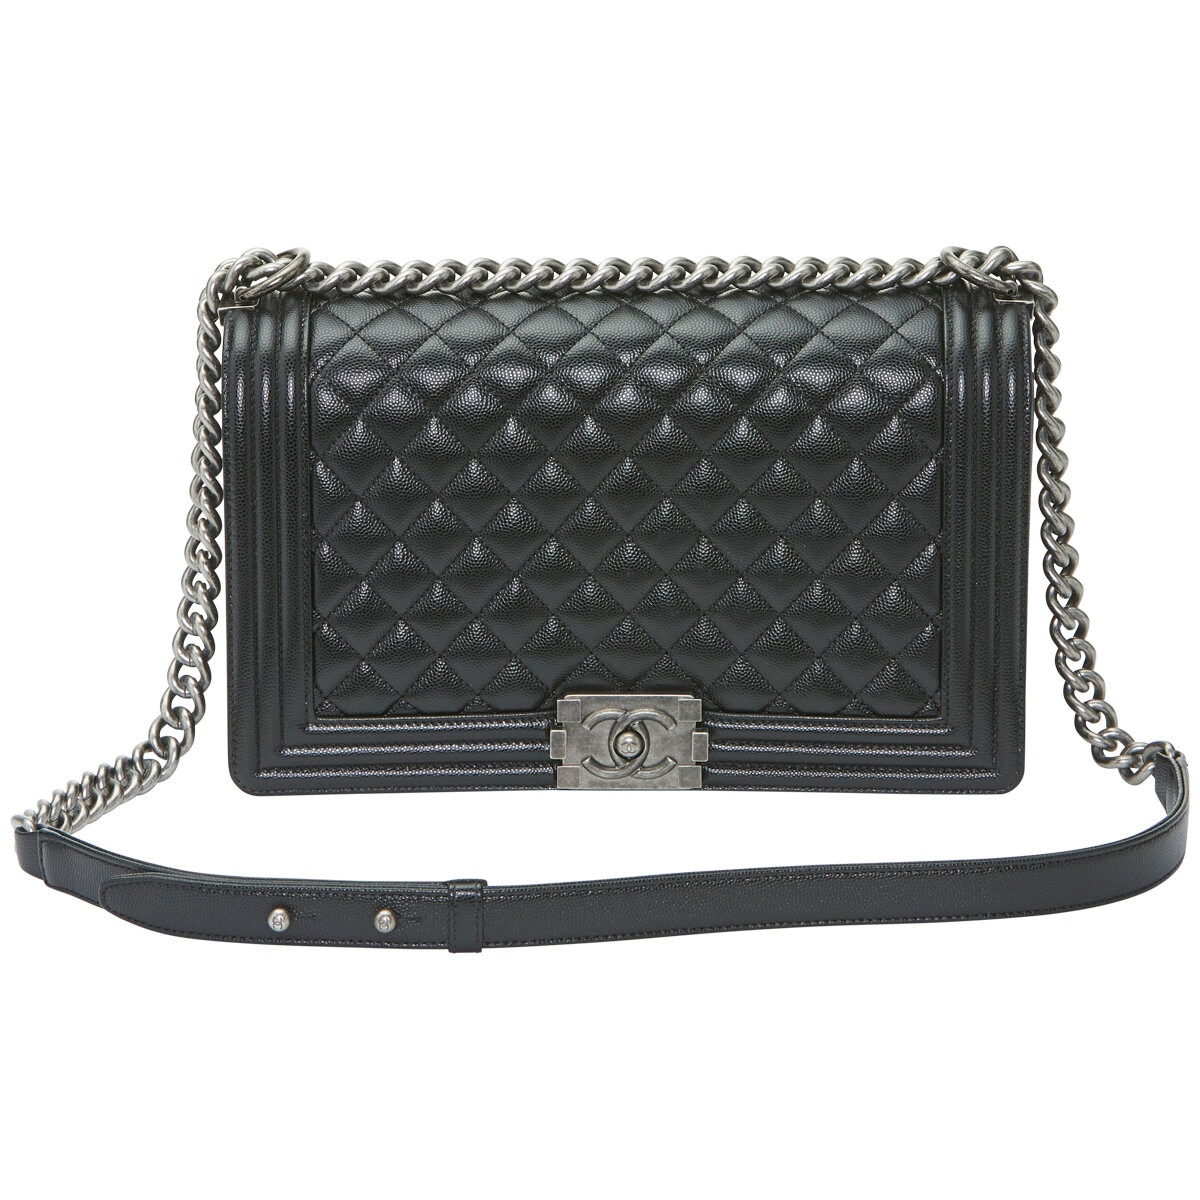 Chanel Boy Leather Bag Black | Costco Australia